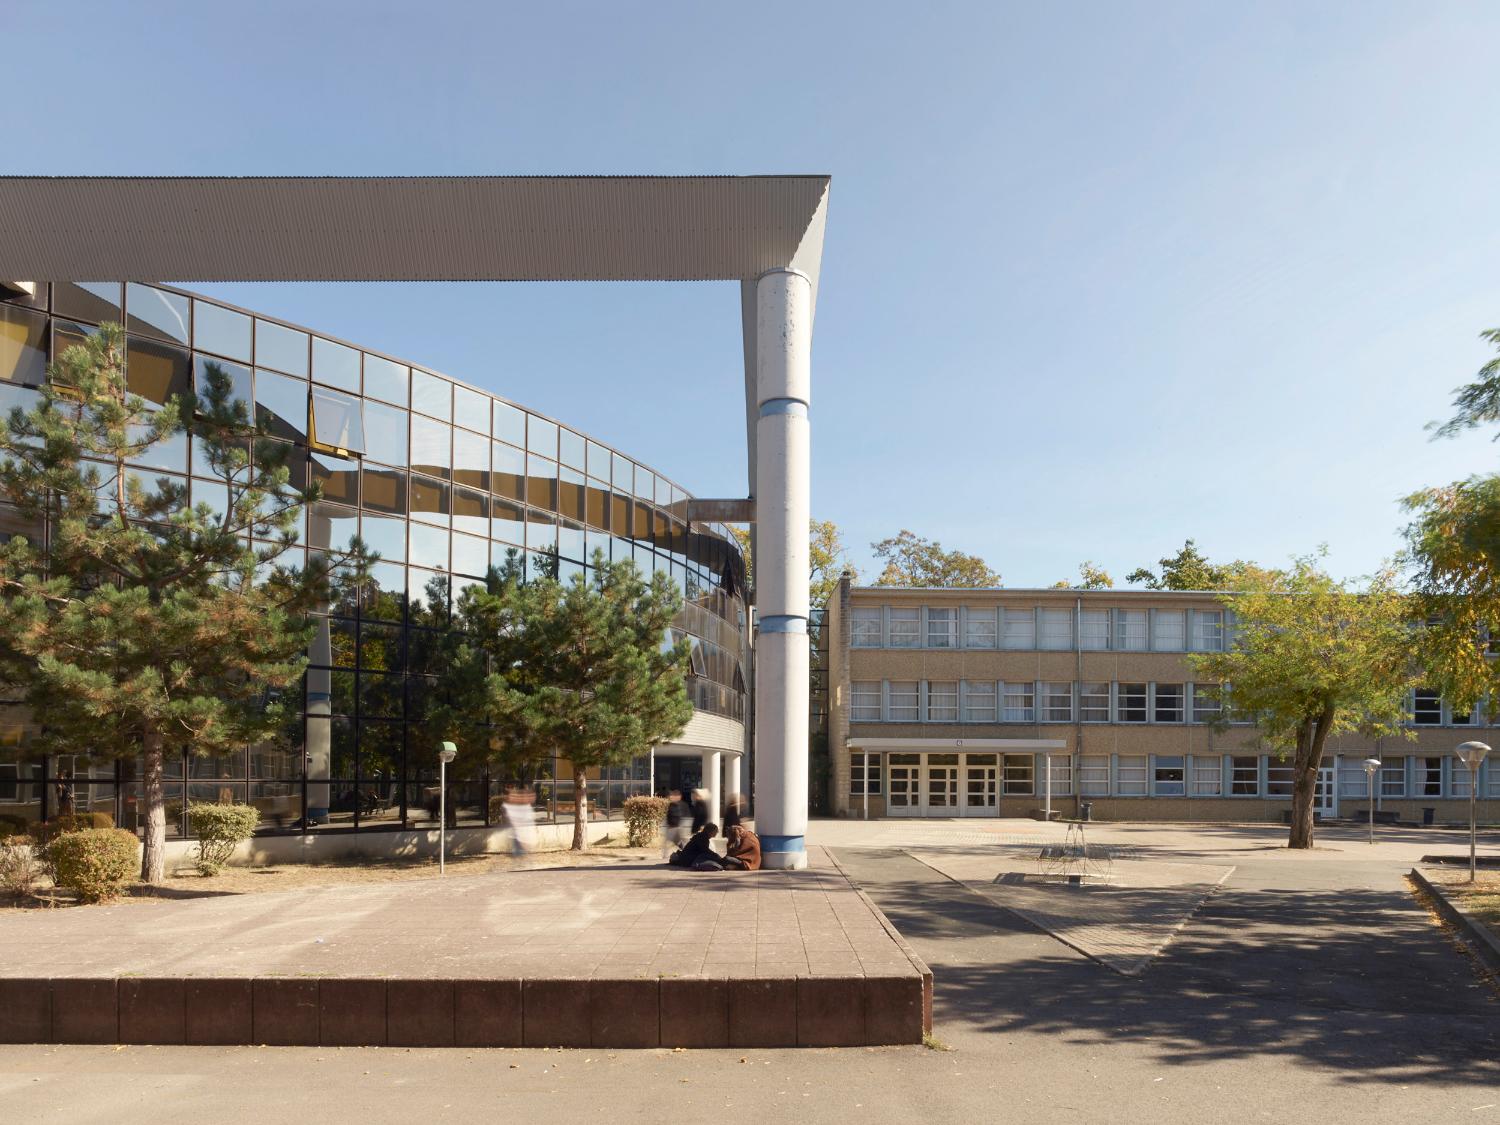 Lycée François-Couperin